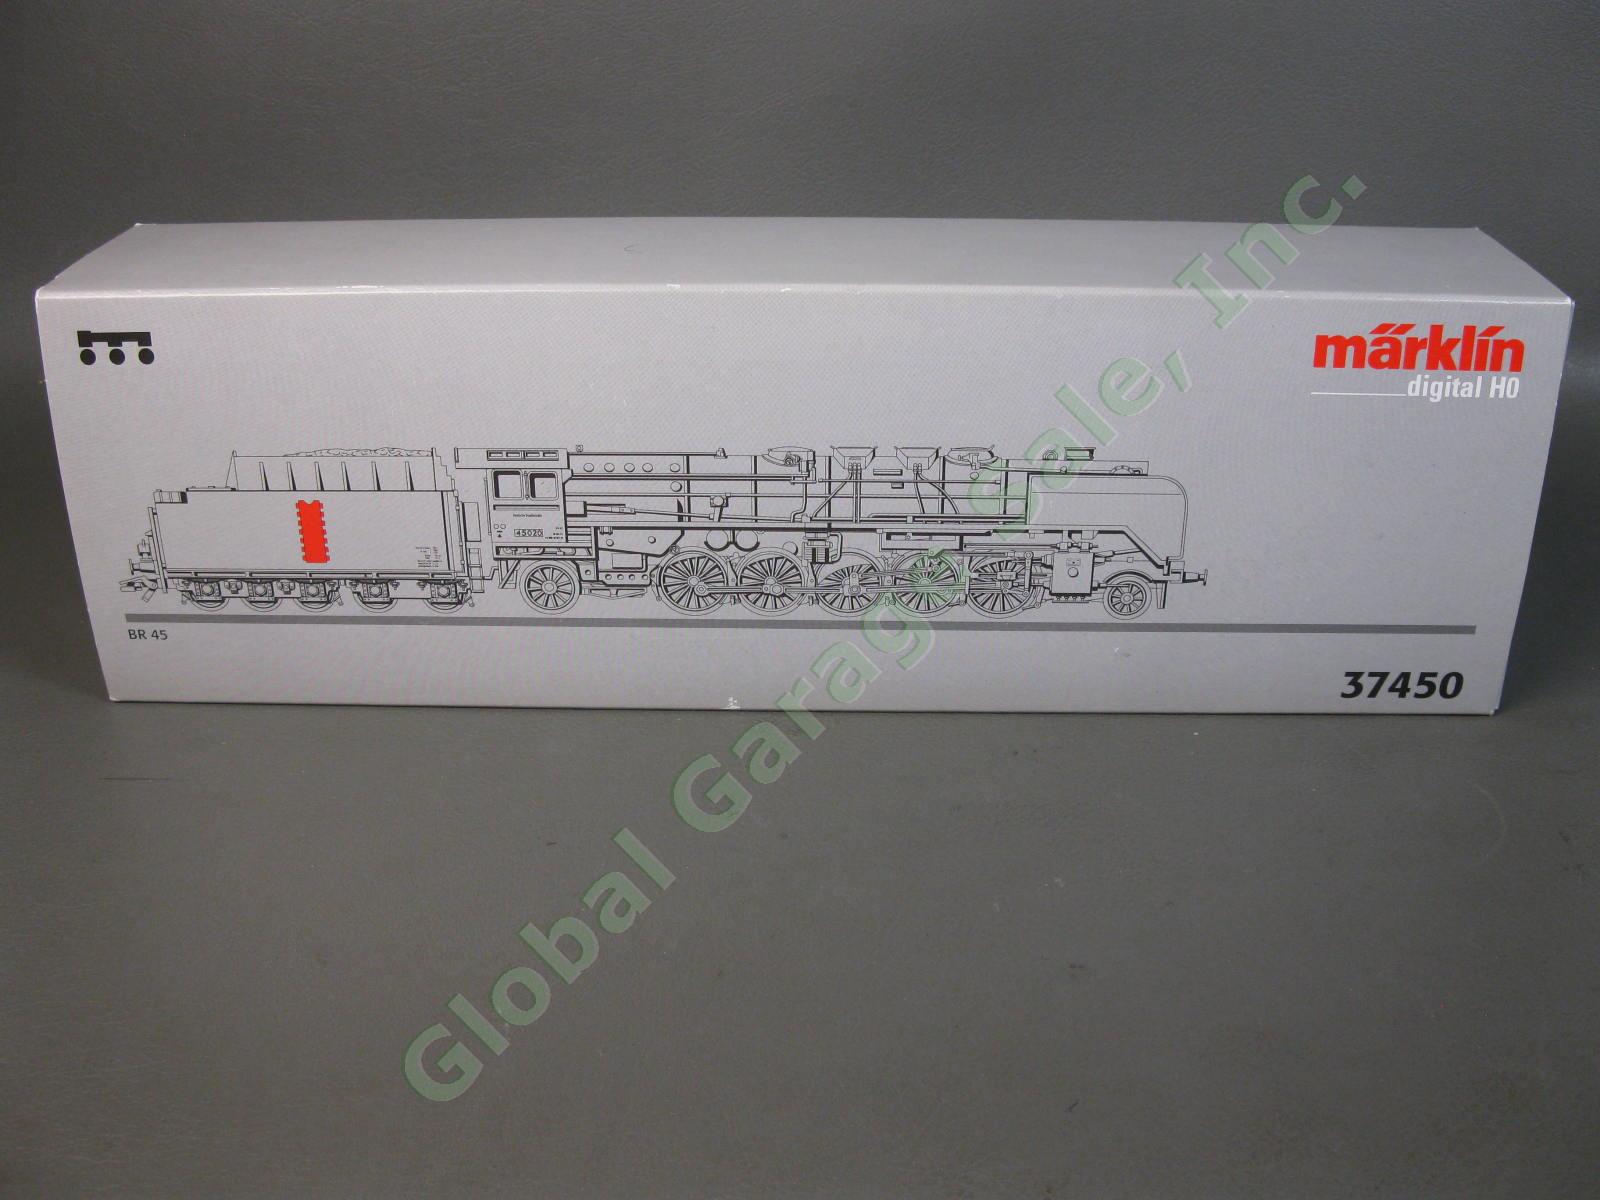 RARE Marklin Digital HO 37450 BR45 Heavy Freight Steam Locomotive Train Engine